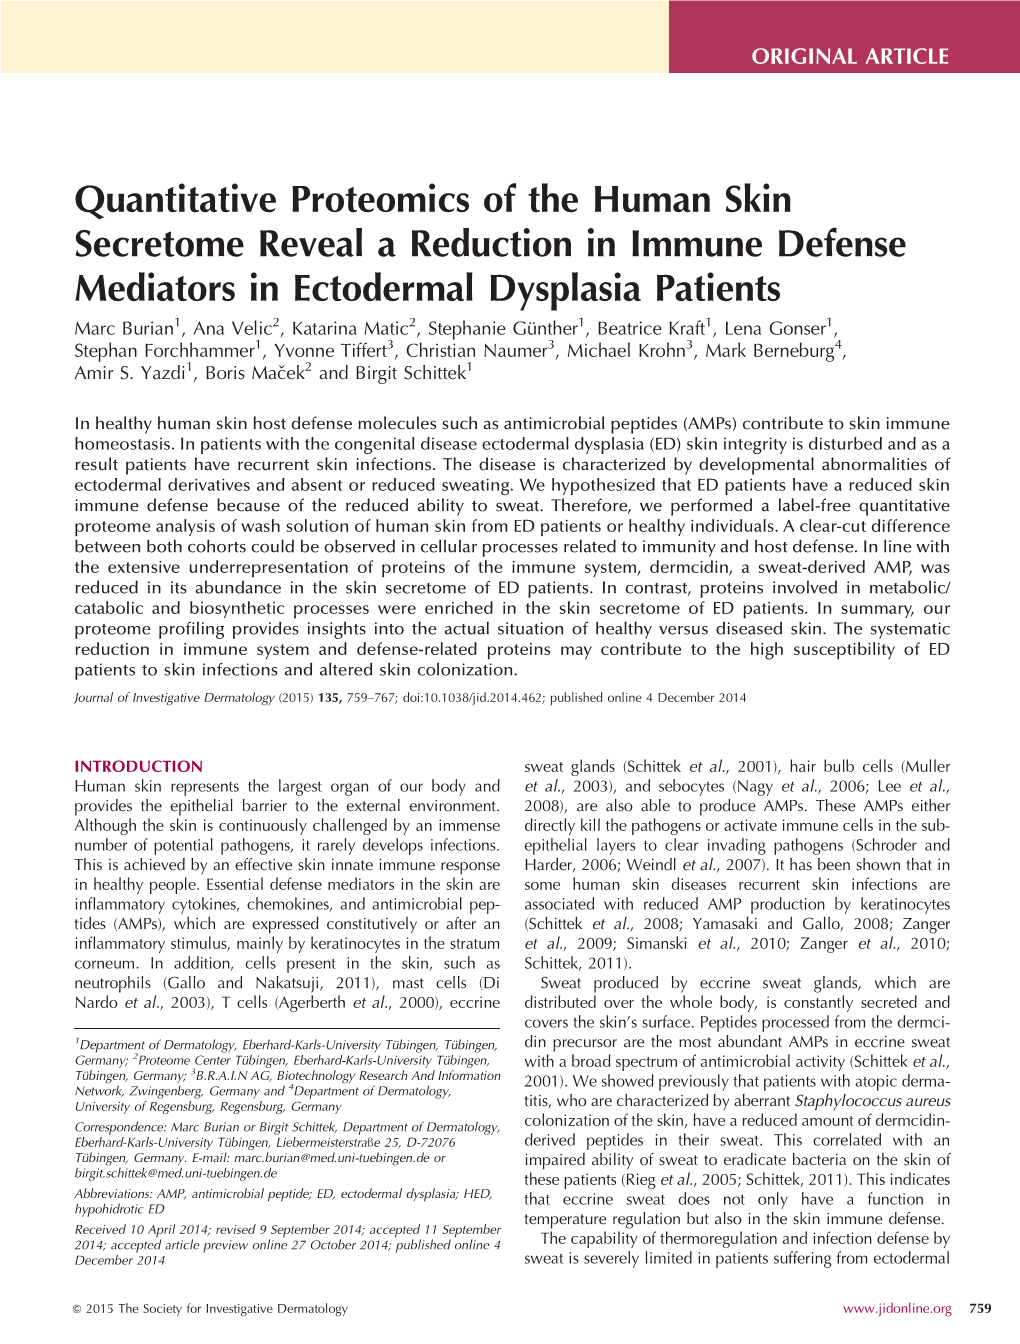 Quantitative Proteomics of the Human Skin Secretome Reveal A